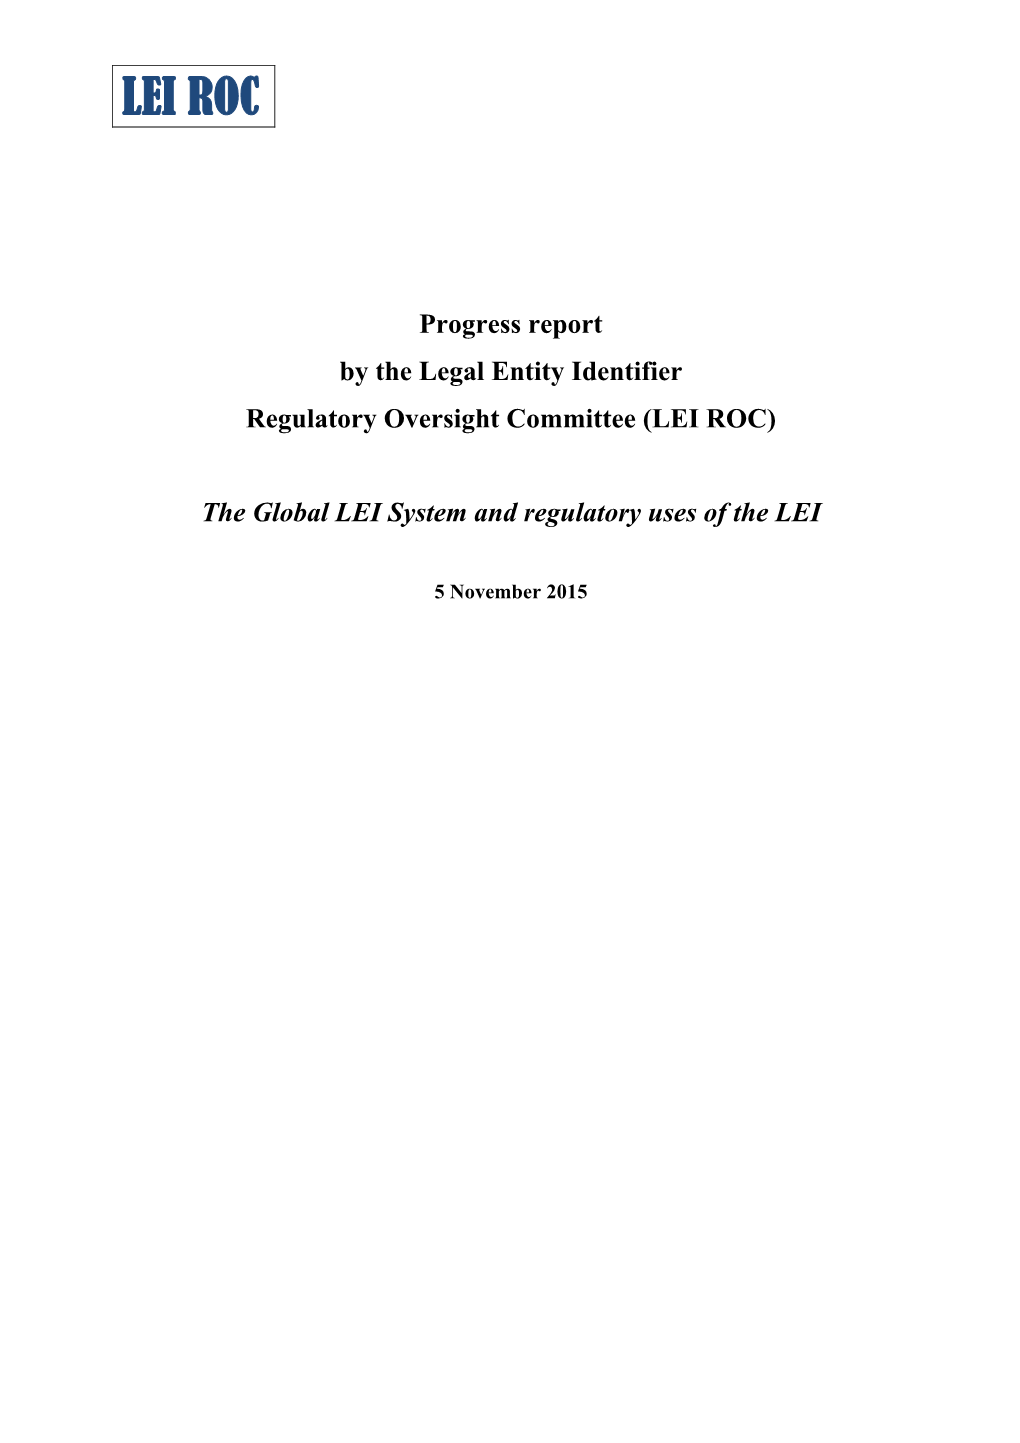 LEI ROC Progress Report to FSB And